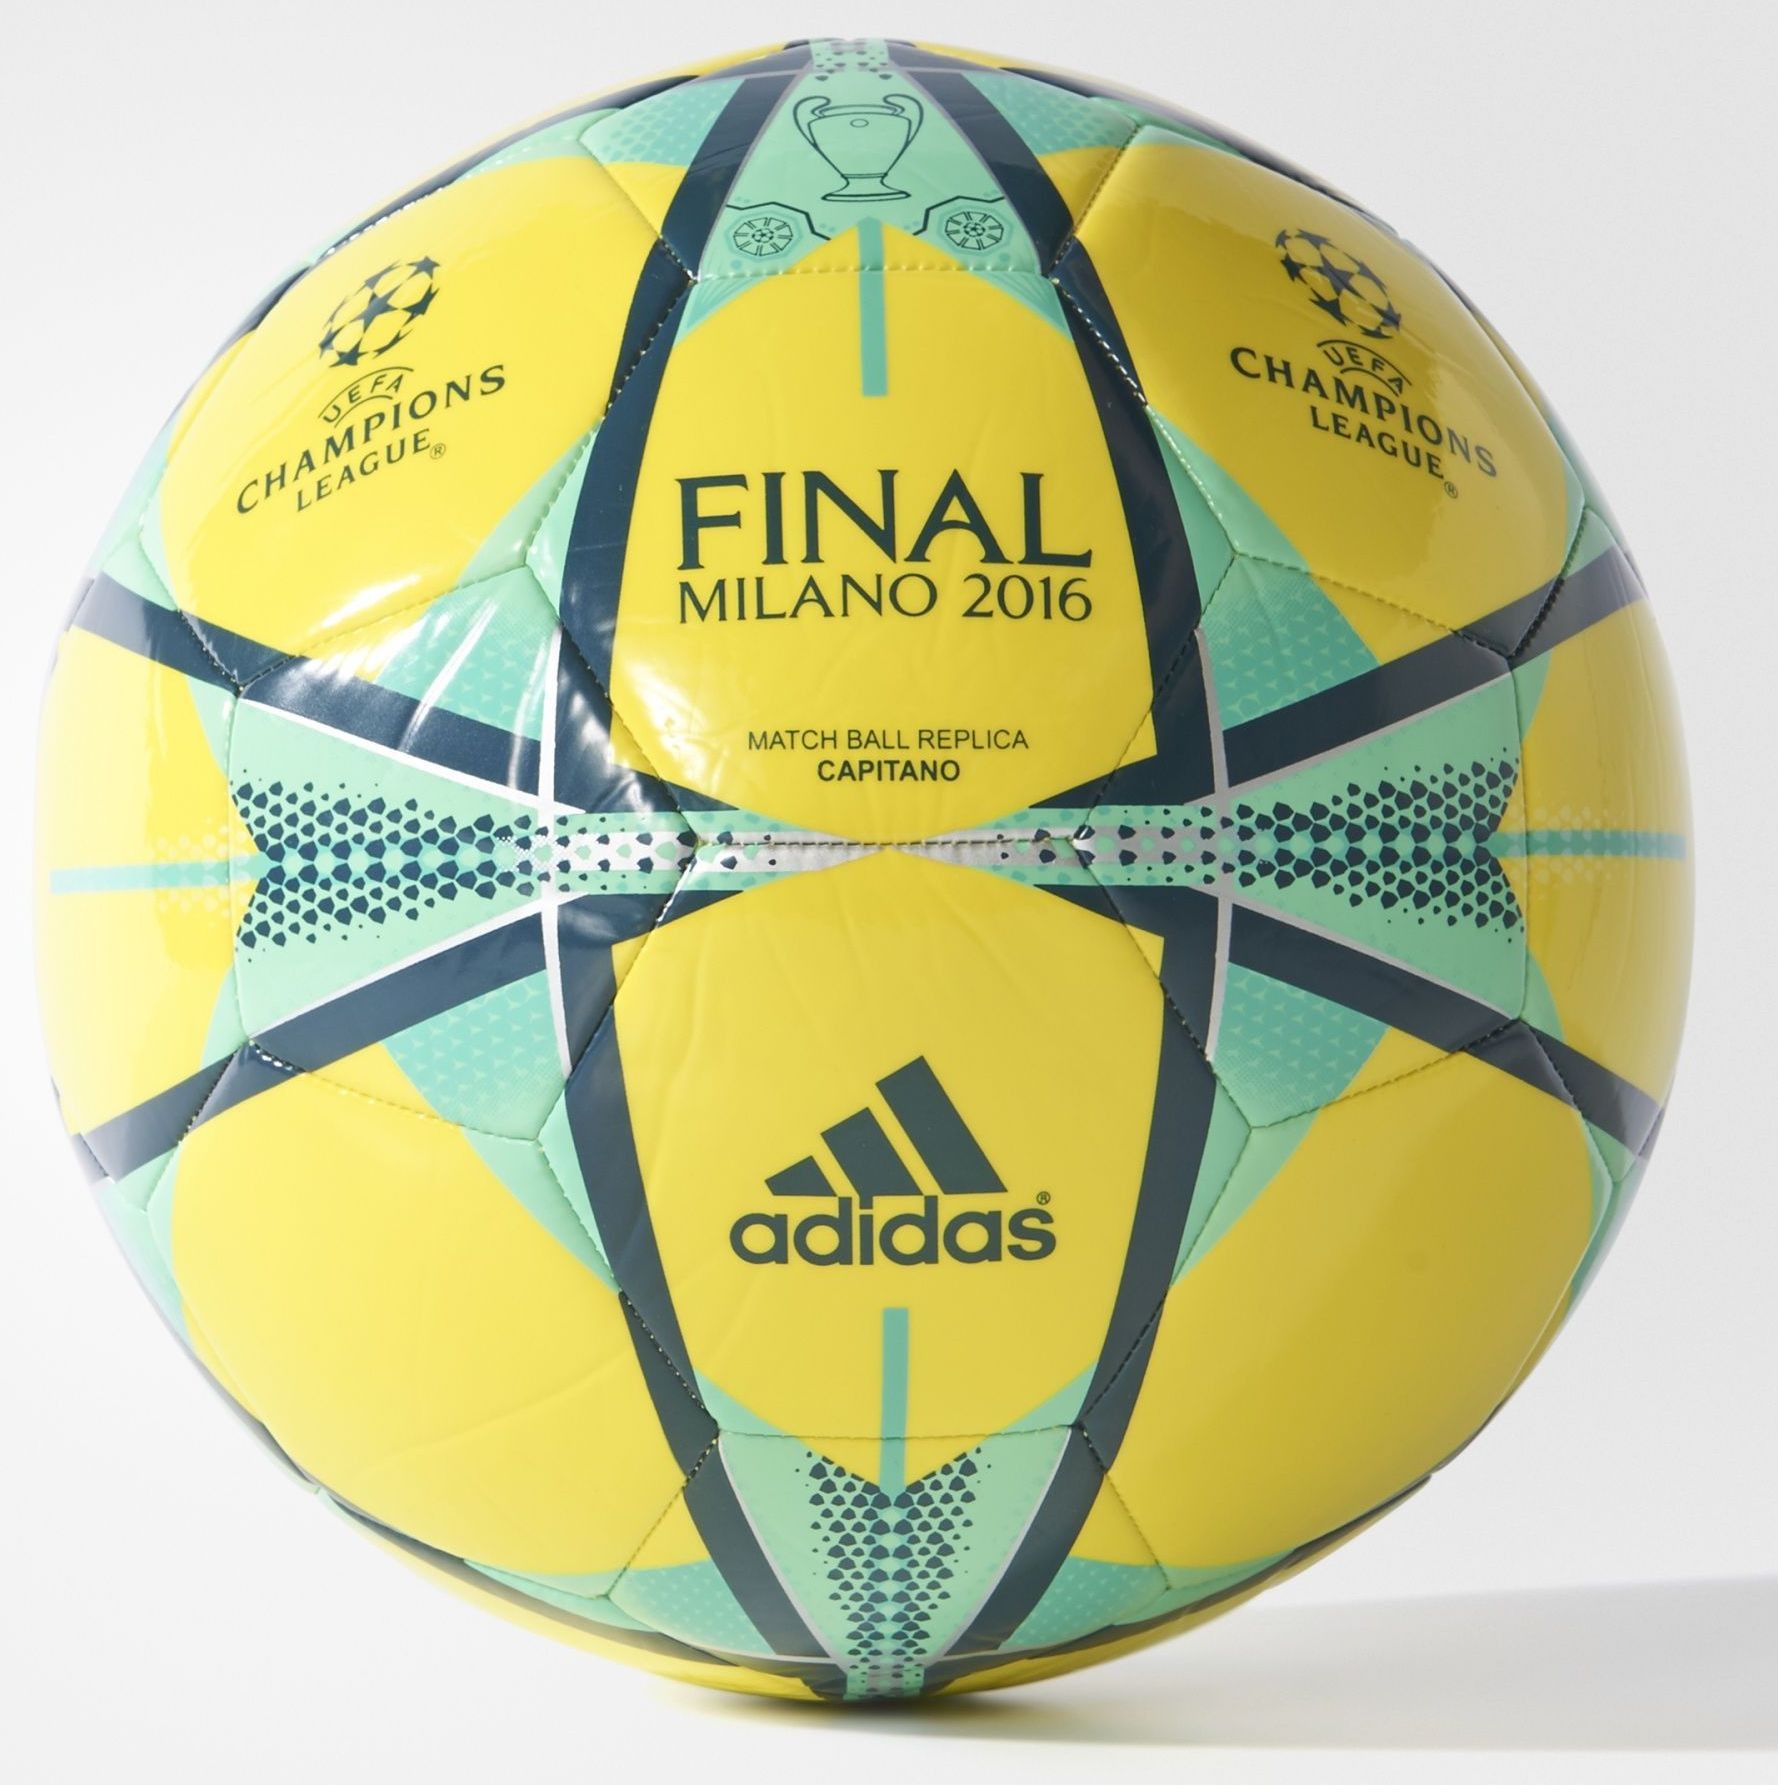 Adidas Ball Finale Capitano Yellow Champions League 2015/16